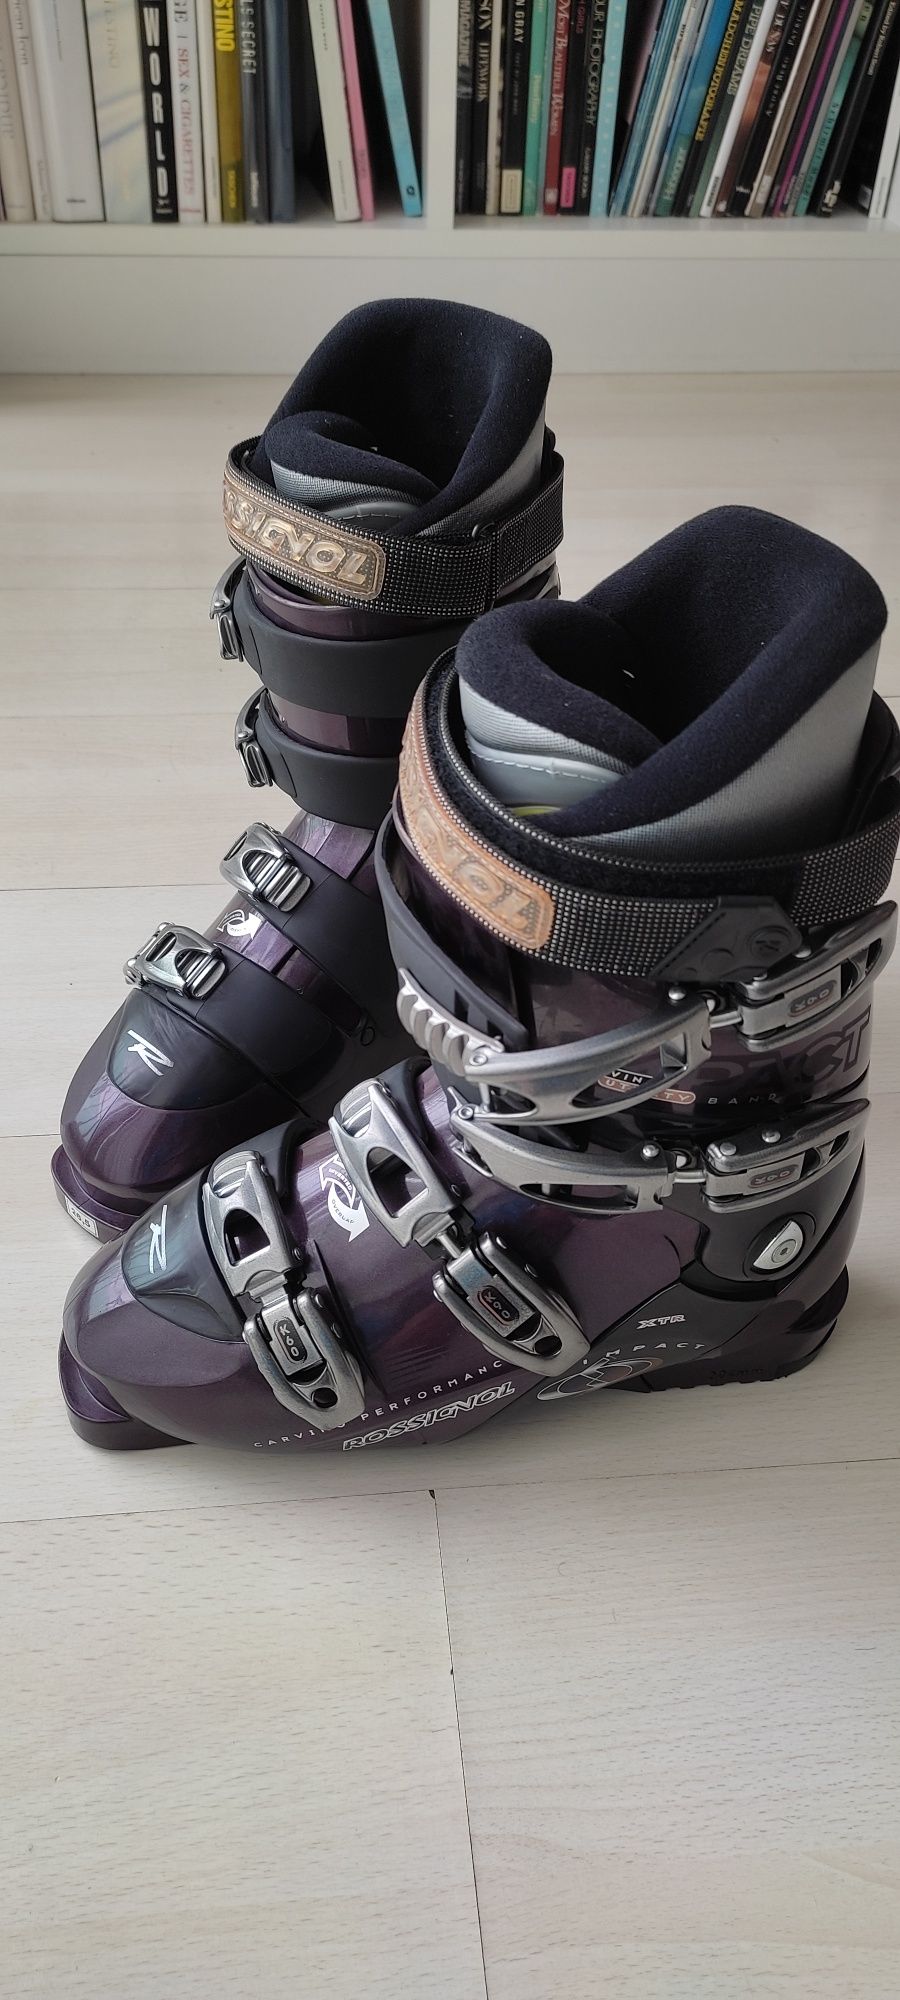 Дамски ски обувки Rossignol Impact XTR, Чисто НОВИ, 26.5, женски